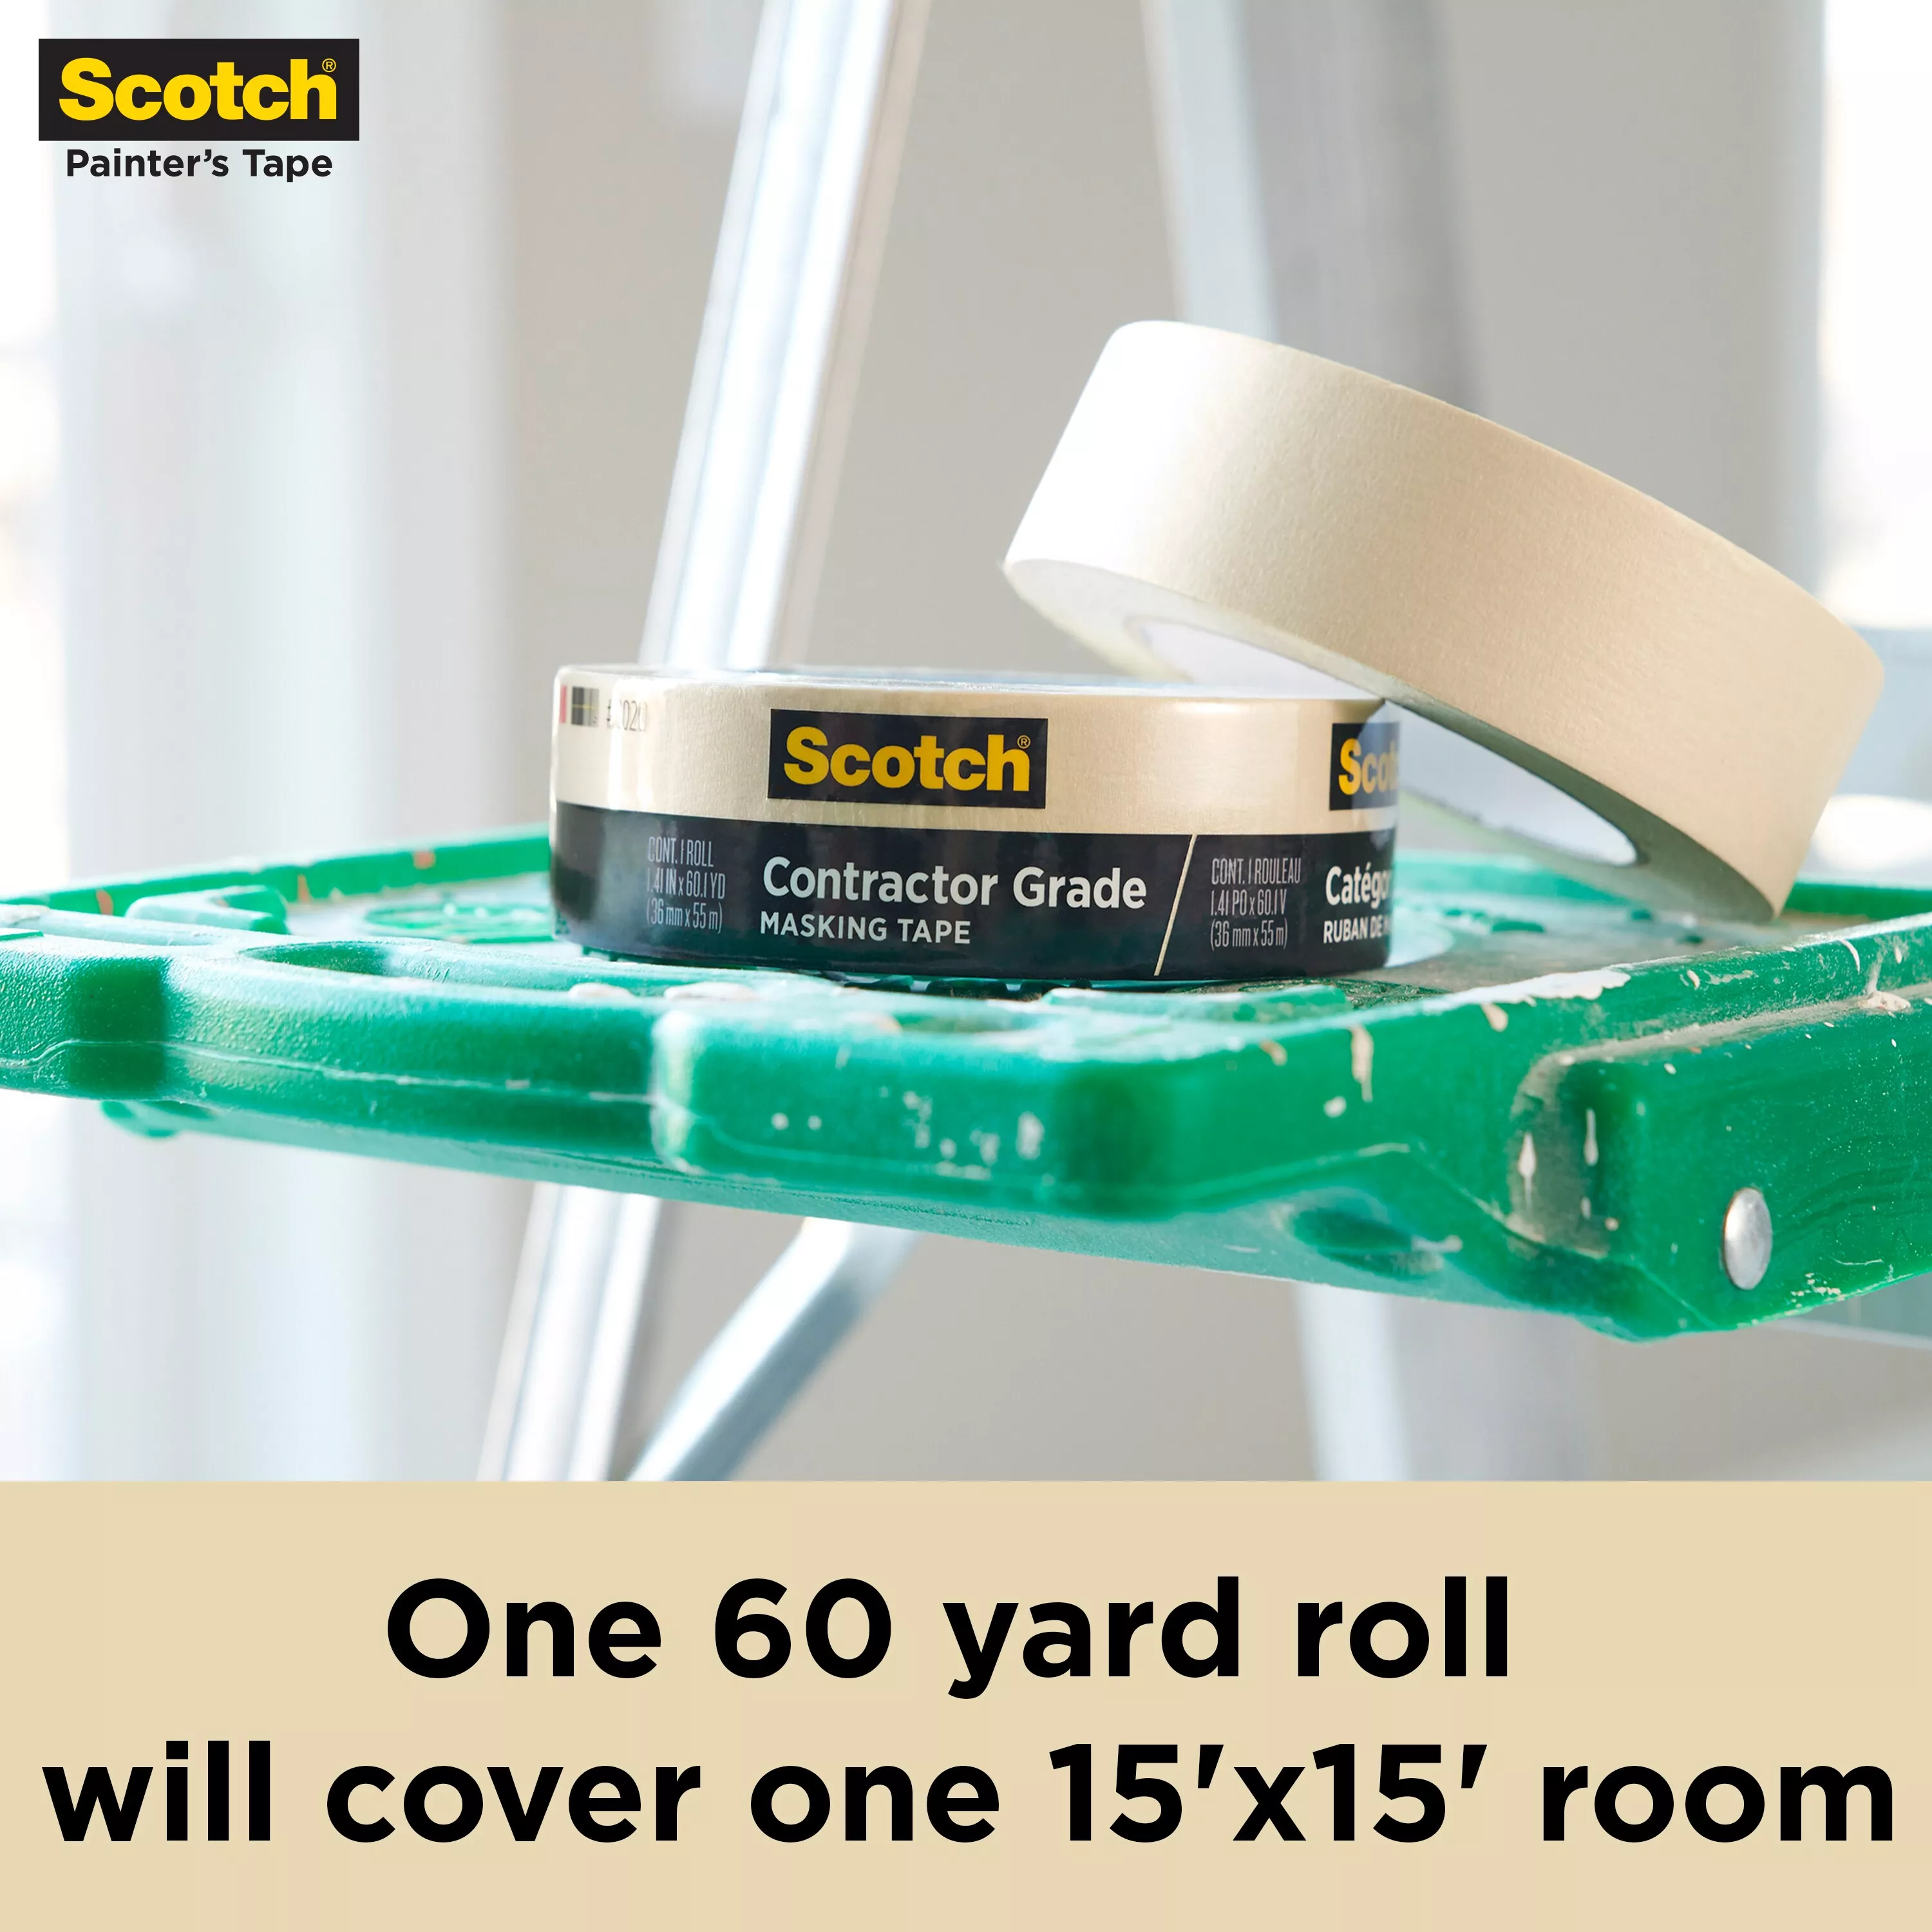 SKU 7100186346 | Scotch® Contractor Grade Masking Tape 2020-24EP6